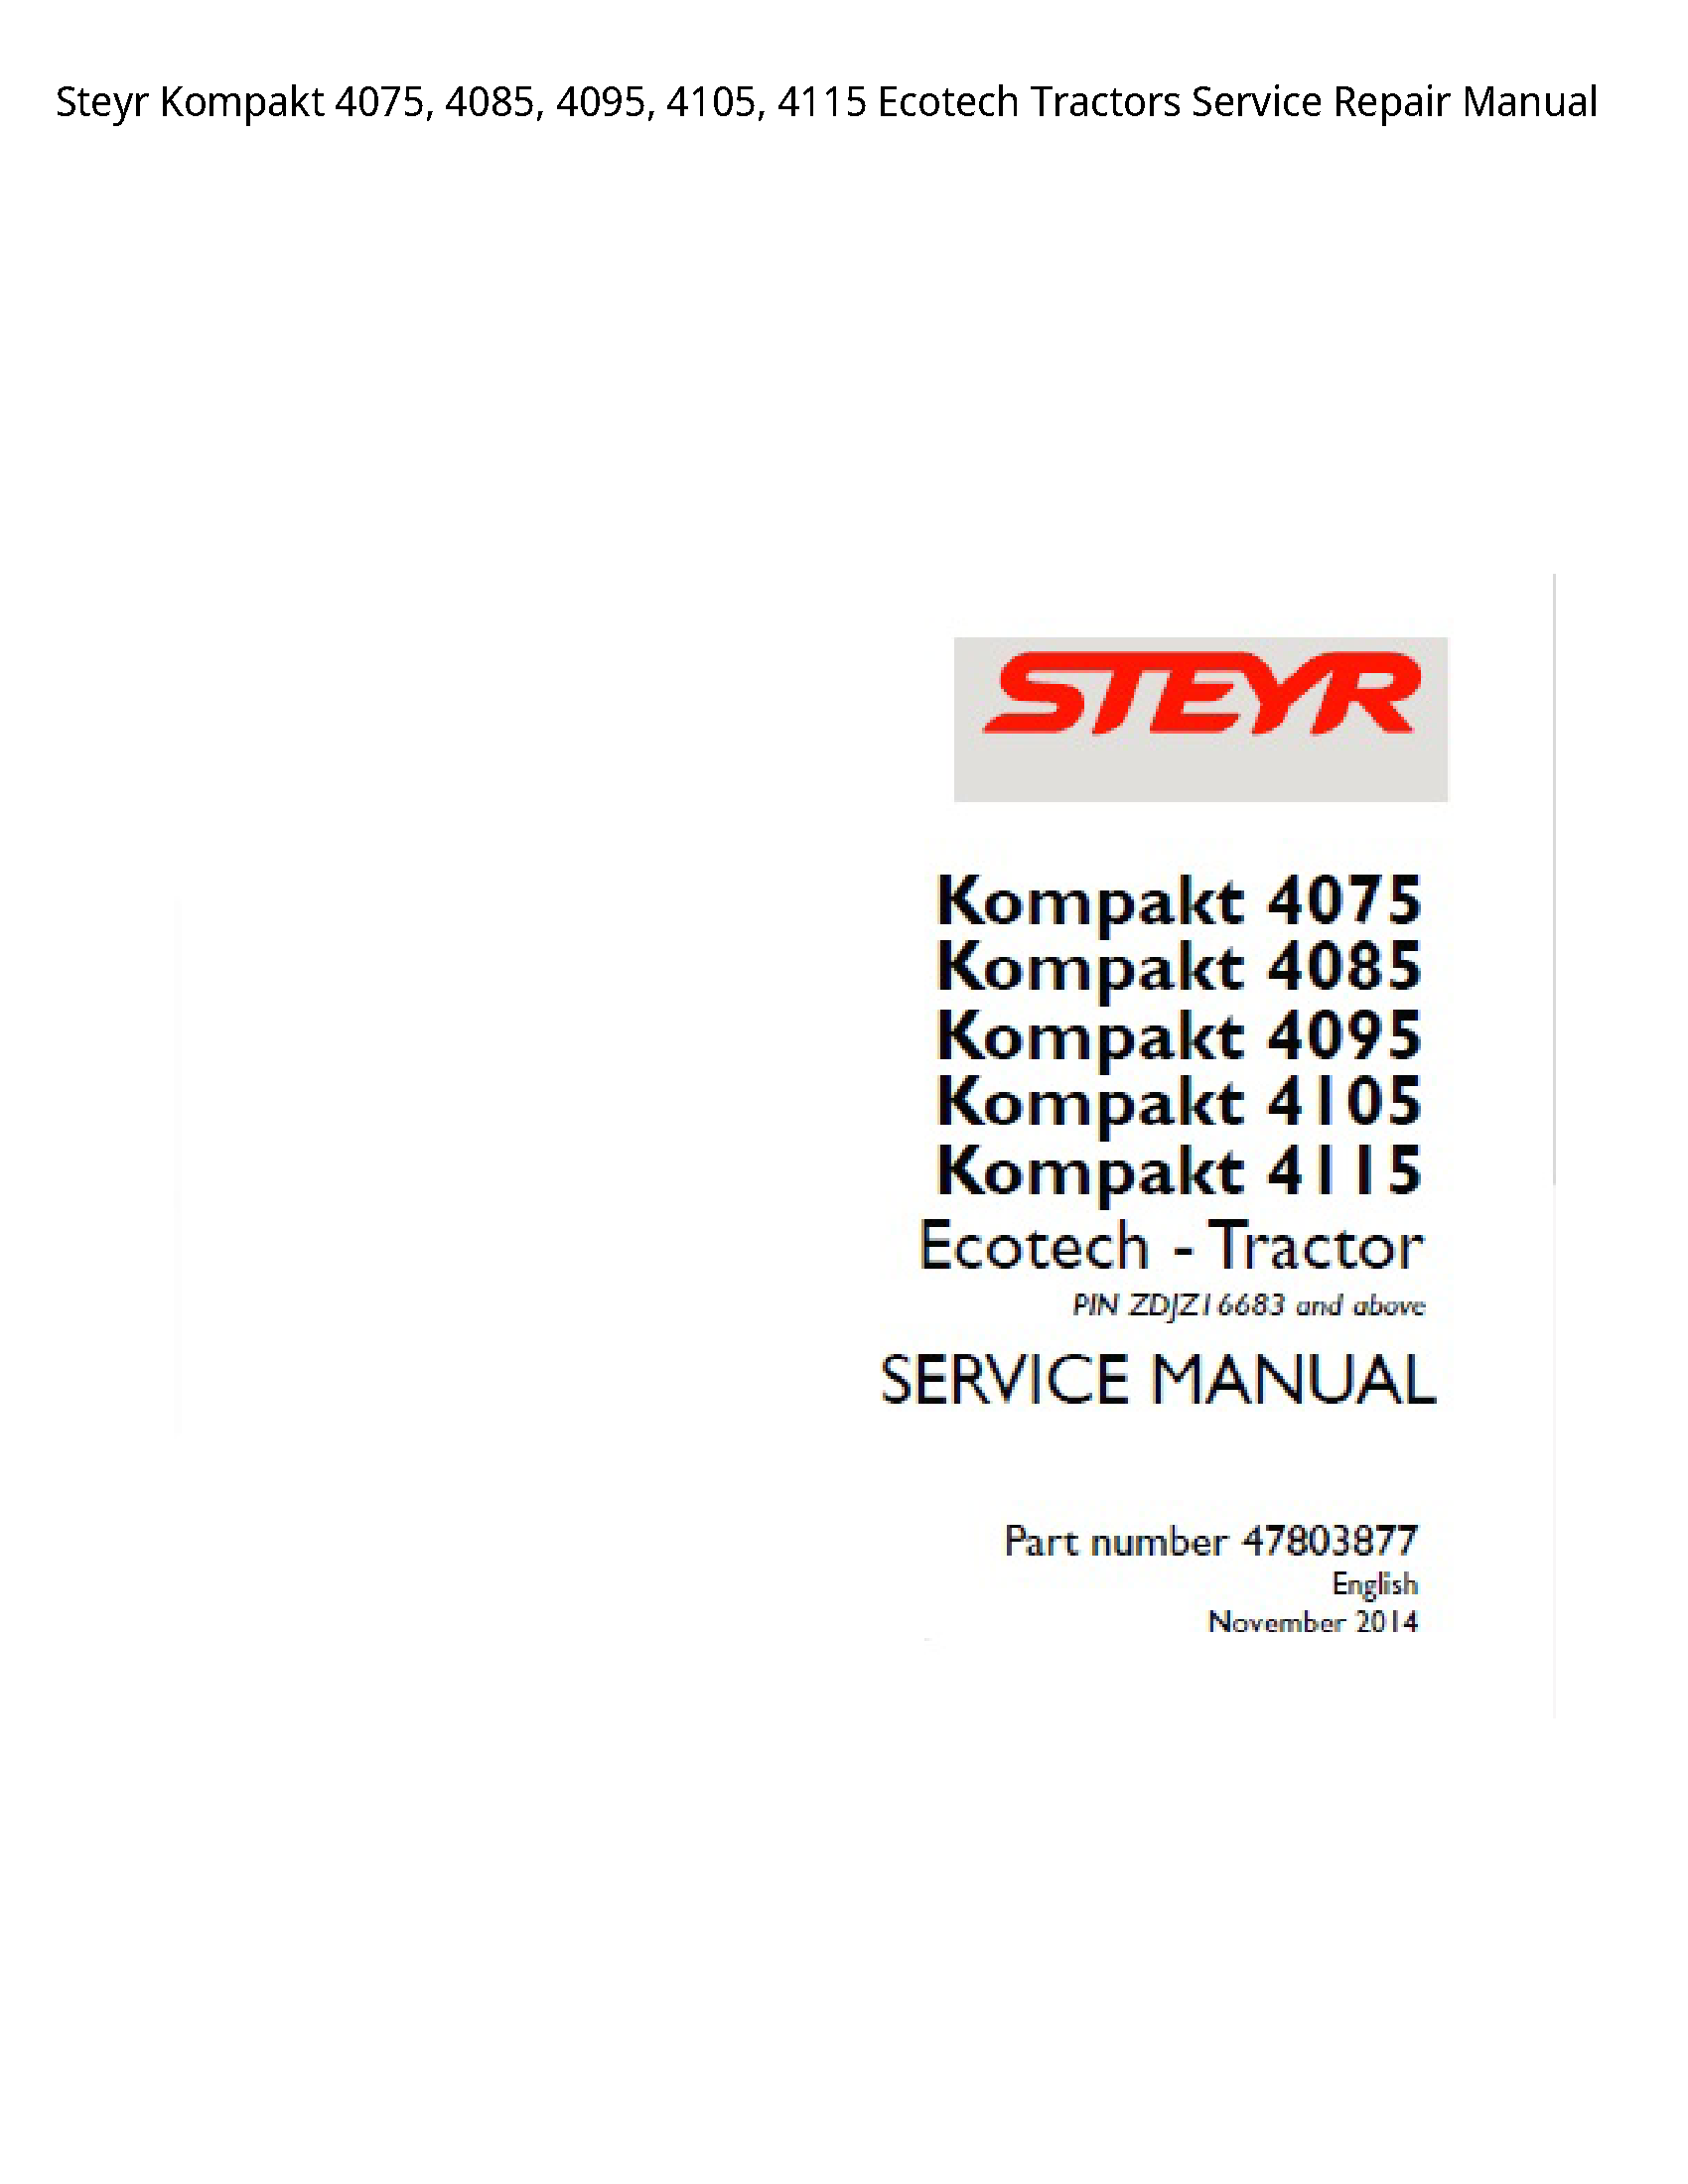 Steyr 4075 Kompakt Ecotech Tractors manual